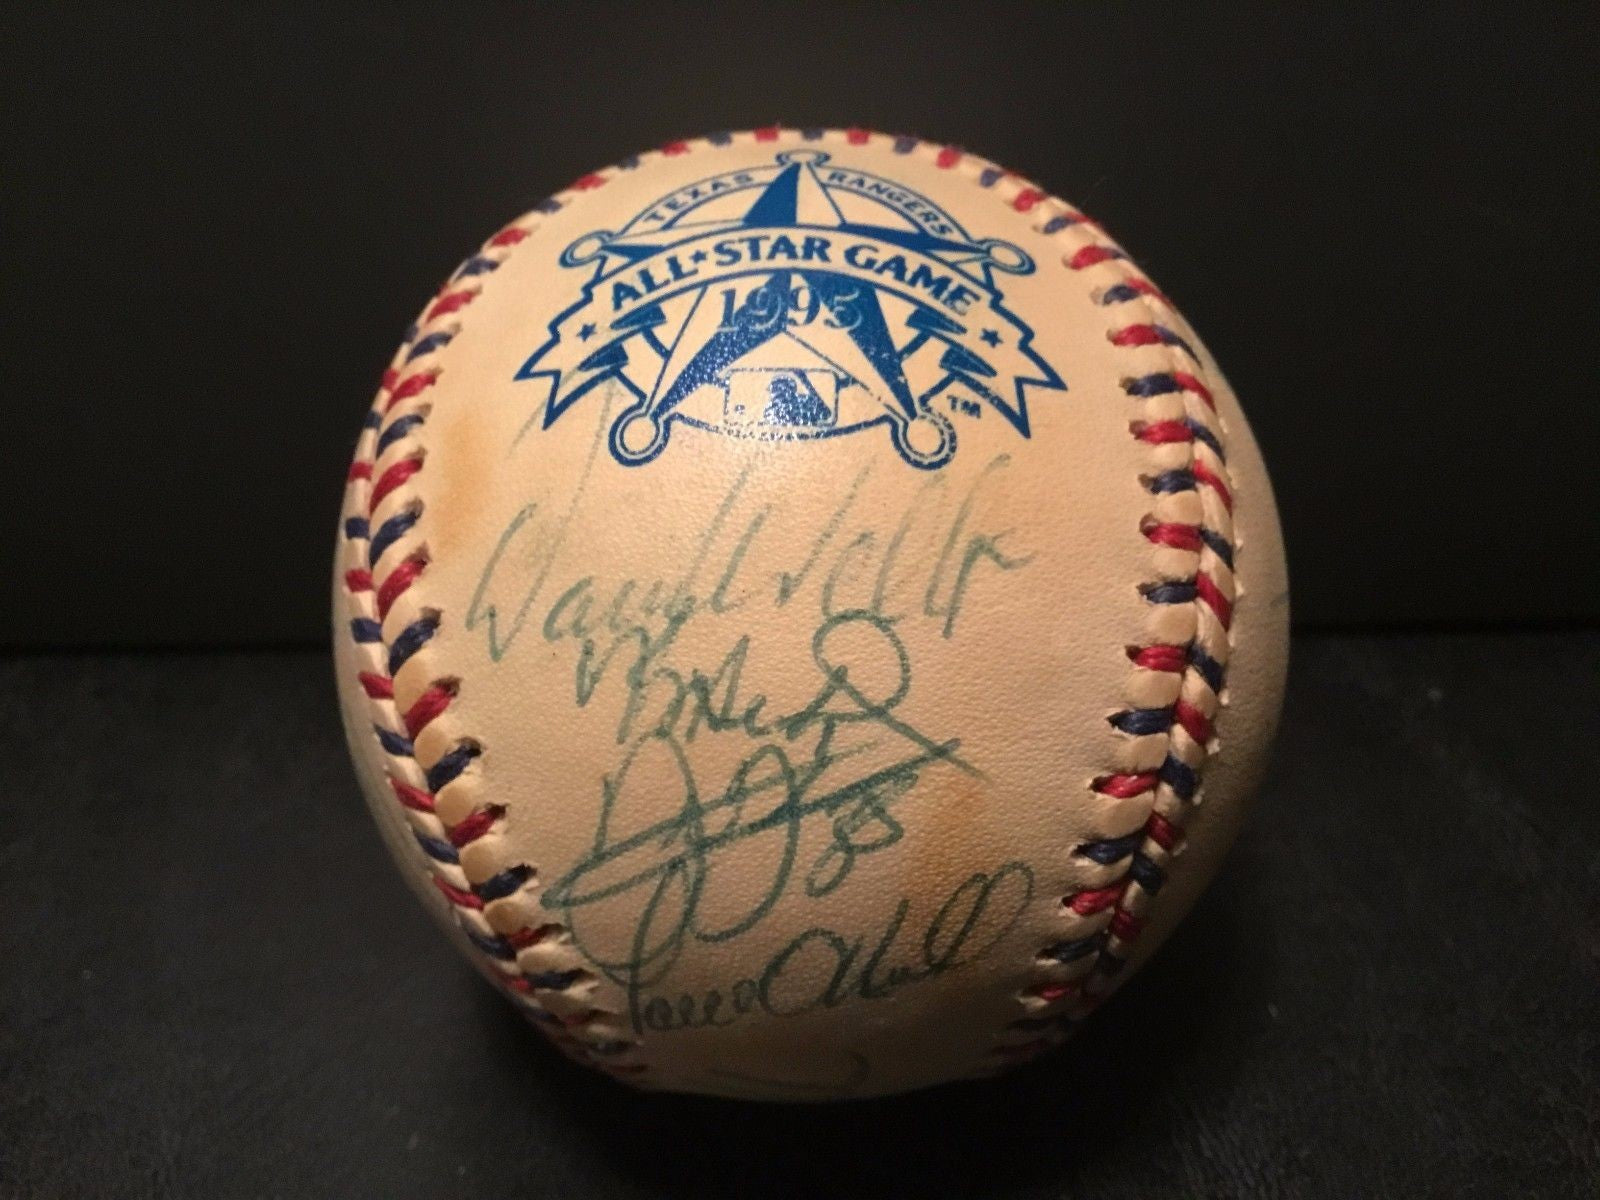 1995 American League All-Star Team autographed baseball (Kirby Puckett Cal Ripken Frank Thomas) JSA